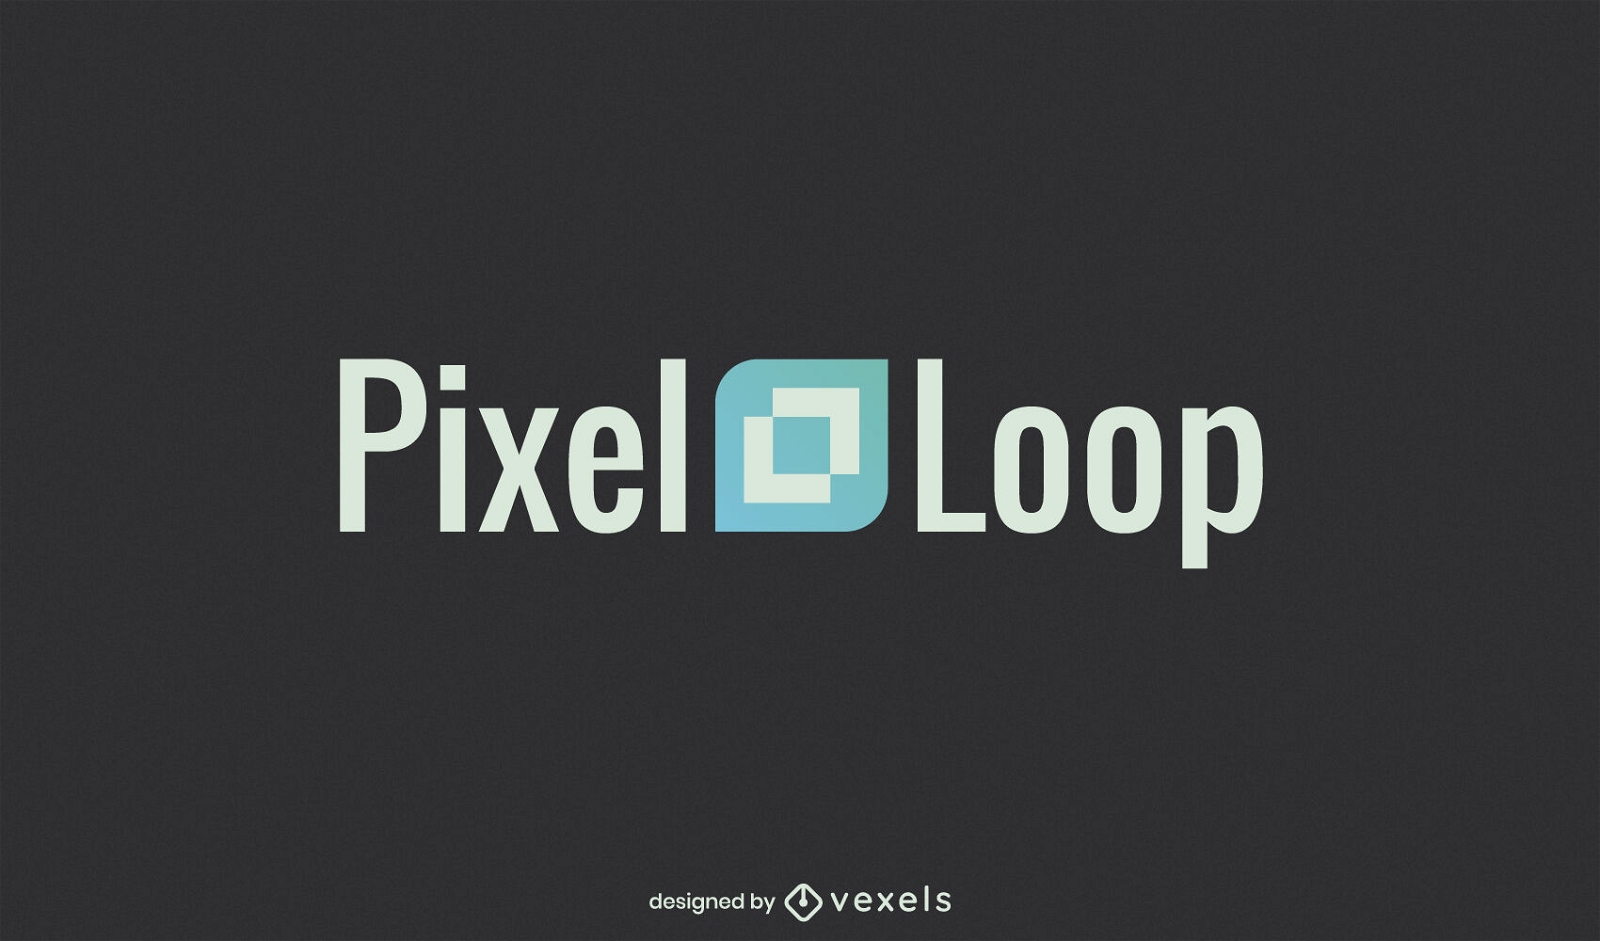 Modelo de logotipo em formato de pixel